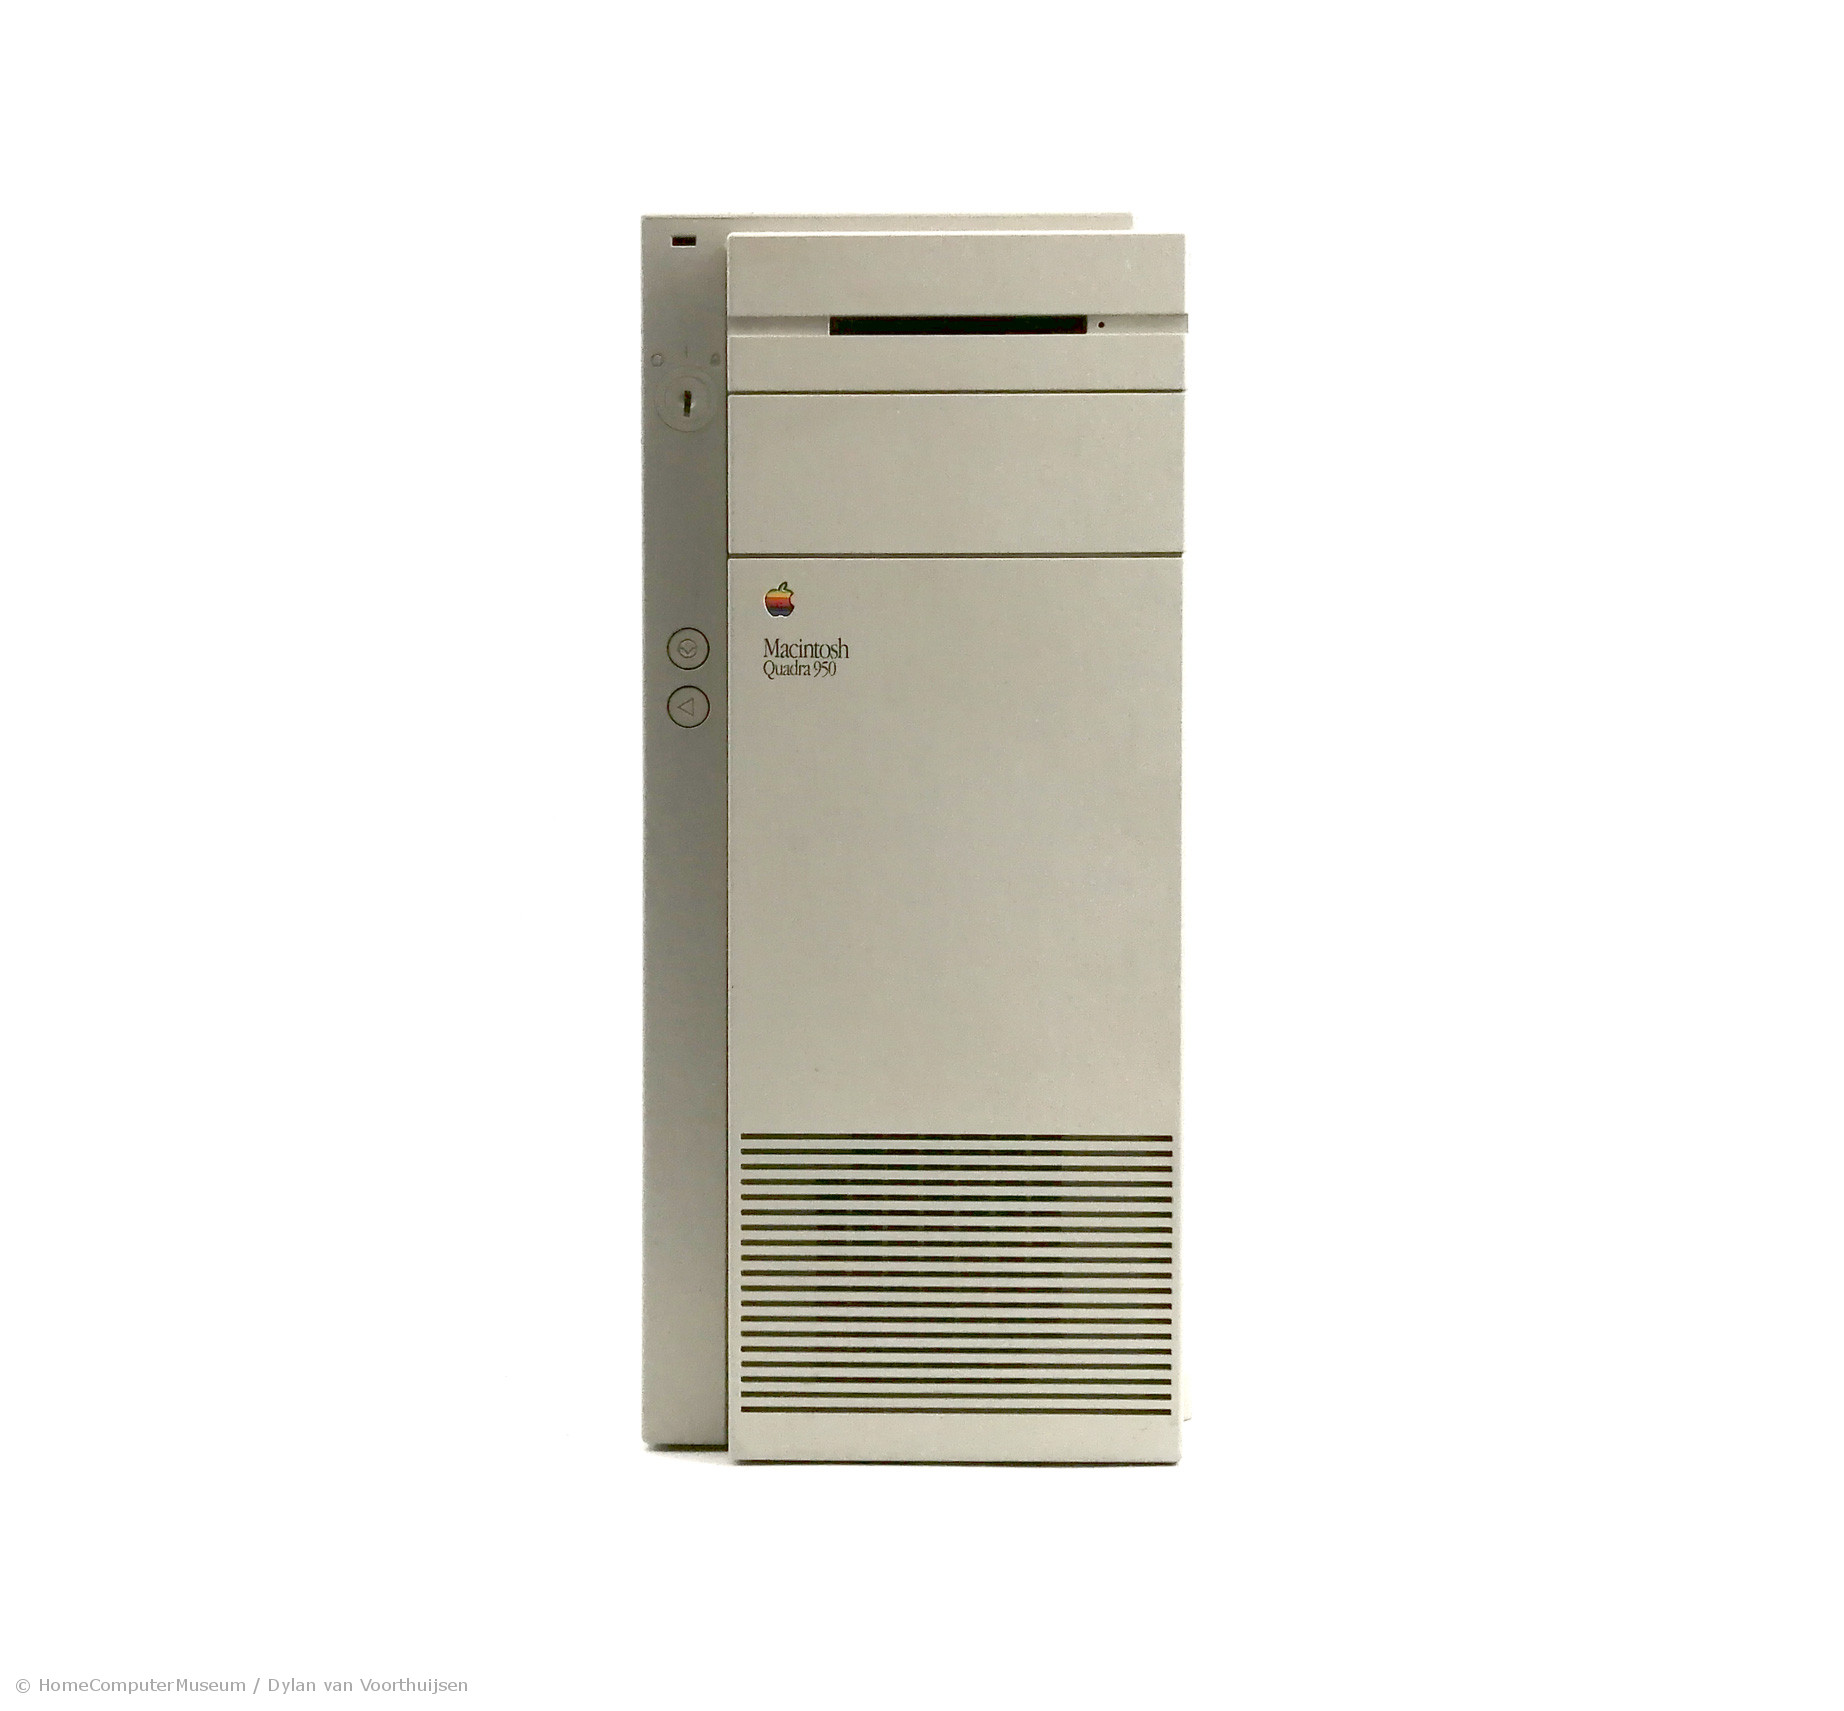 HomeComputerMuseum - Macintosh Quadra 950